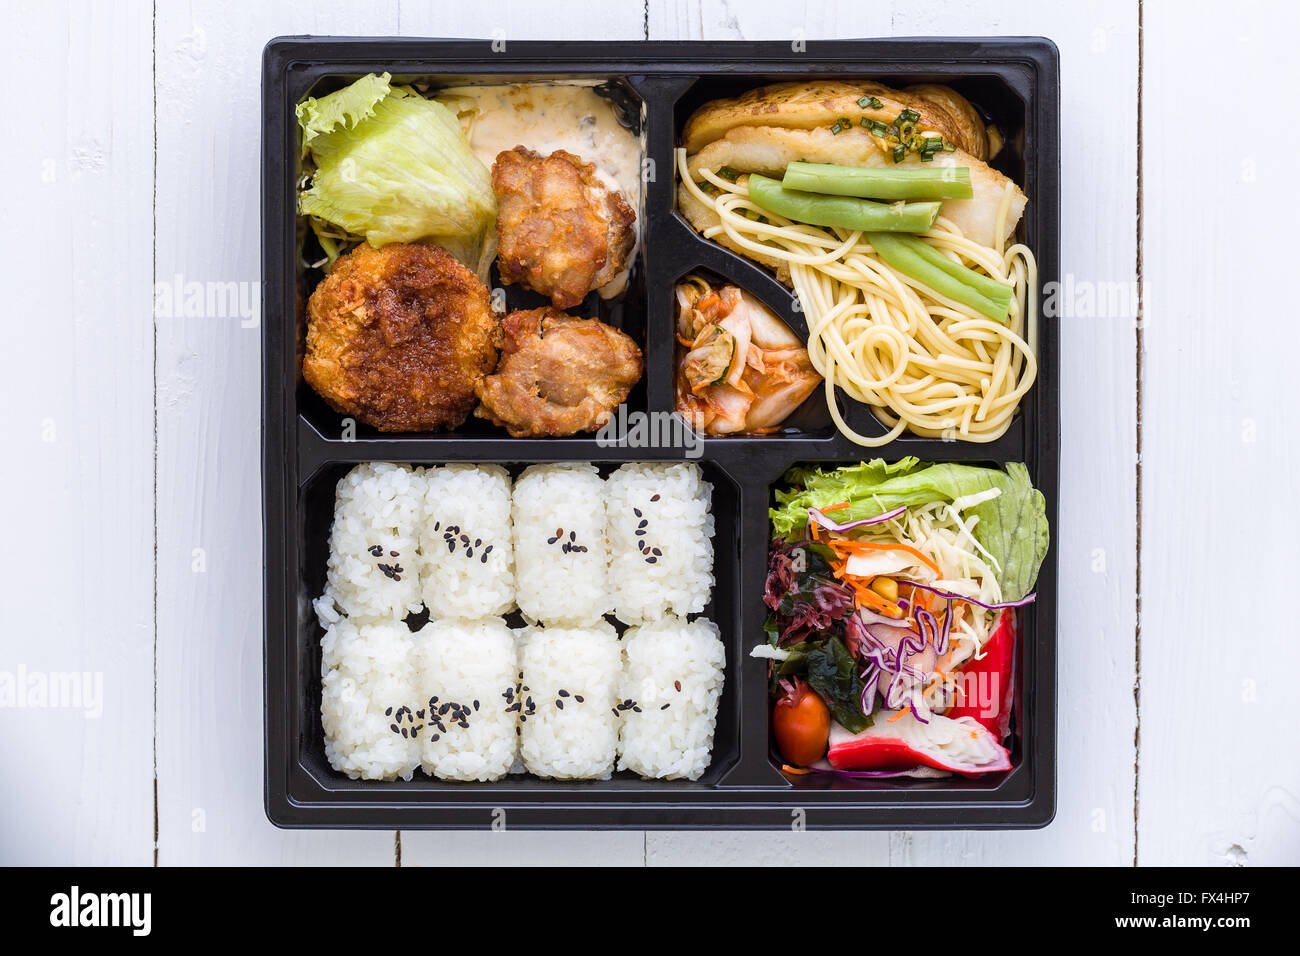 https://c8.alamy.com/comp/FX4HP7/bento-box-set-traditional-japanese-food-set-for-lunch-FX4HP7.jpg